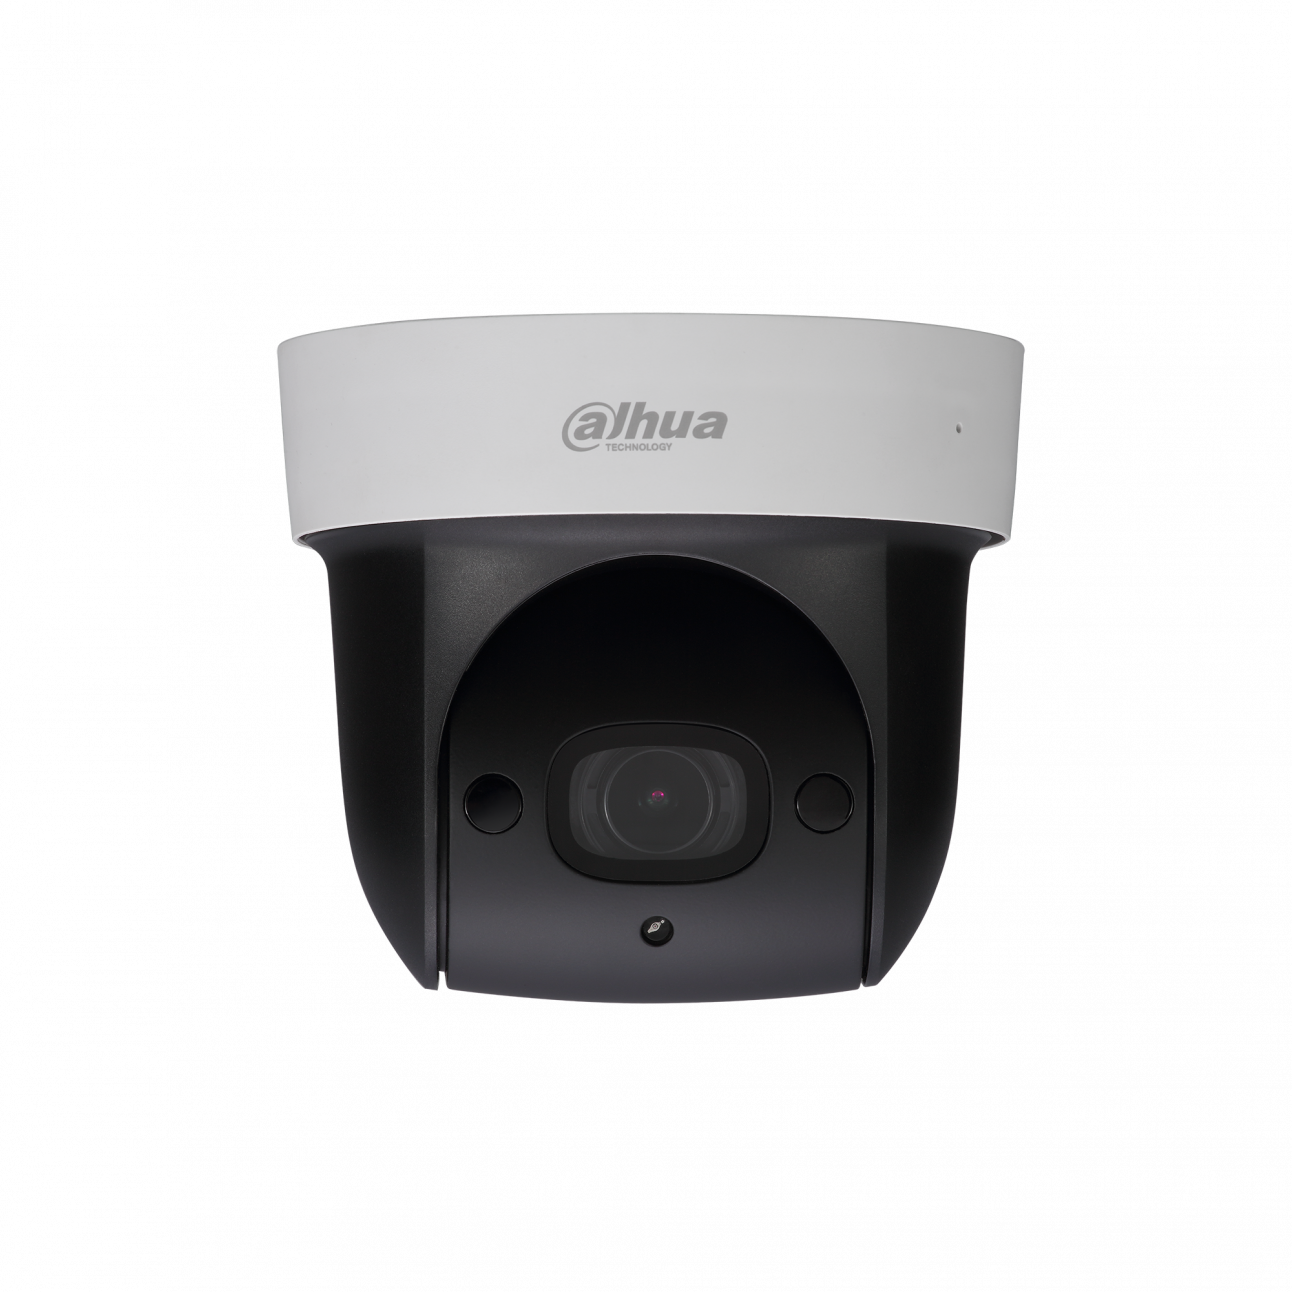 IP камера Dahua DH-SD29204T-GN скоростная купольная поворотная 2Мп, 25к/с, 1080p, 50к/с, 720p, 4-кратное опт. увелич., ИК-подсветка до 30м